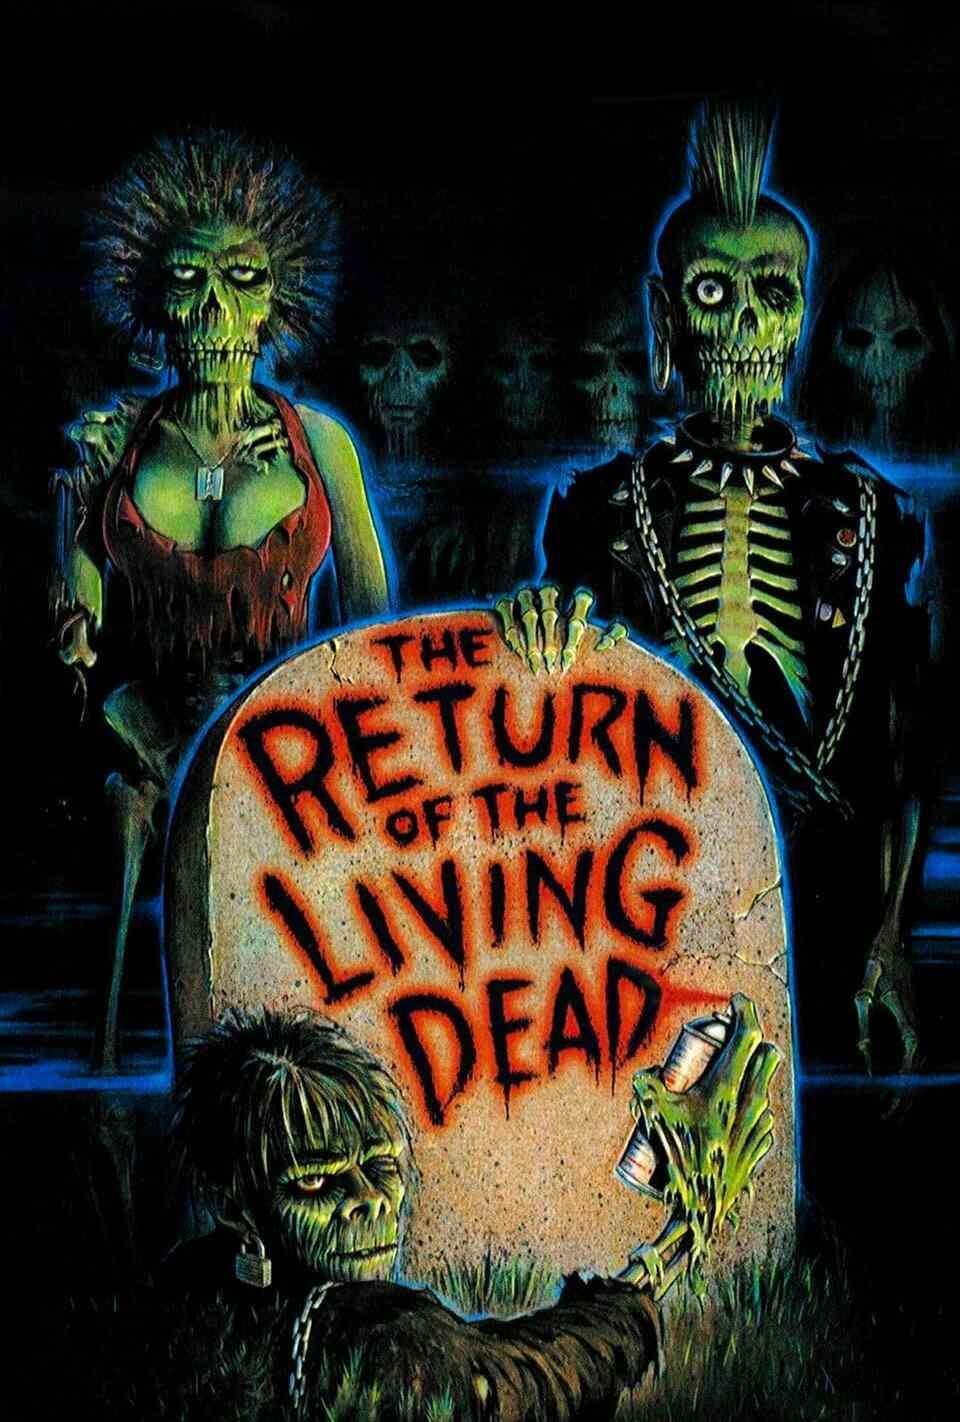 Read Return of the Living Dead screenplay.